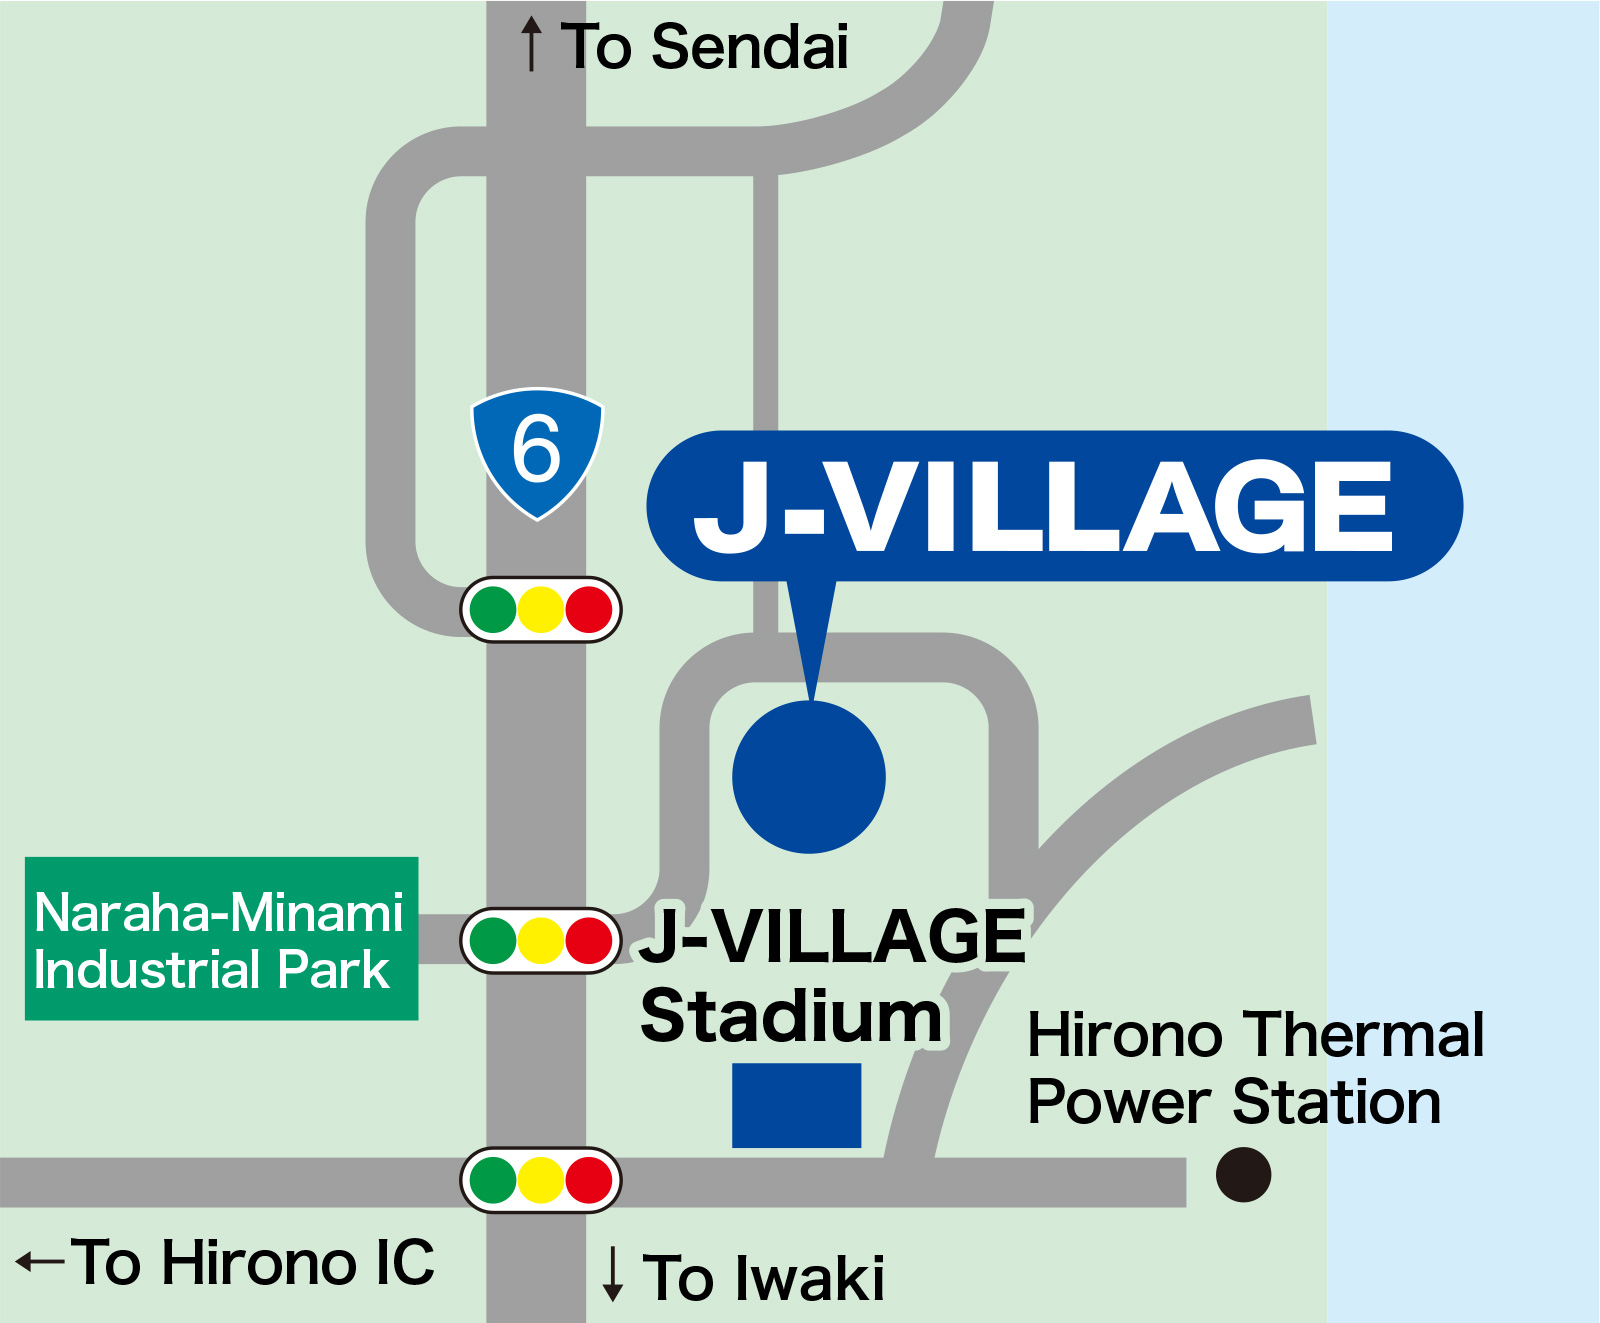 National Training Center J-VILLAGE